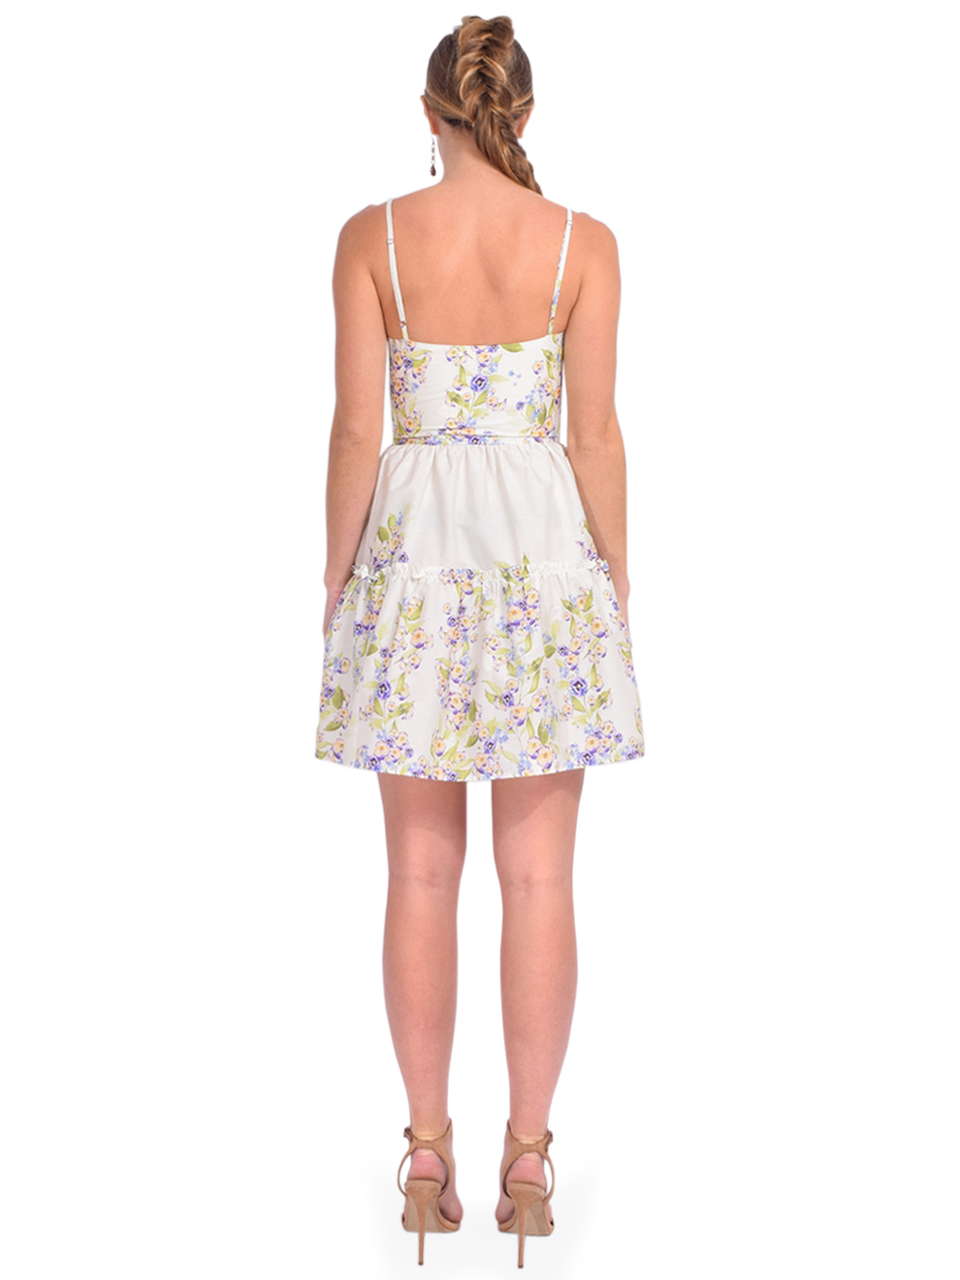 LALIBELA Alessa Short Dress in White/Purple/Multi Floral Back View 